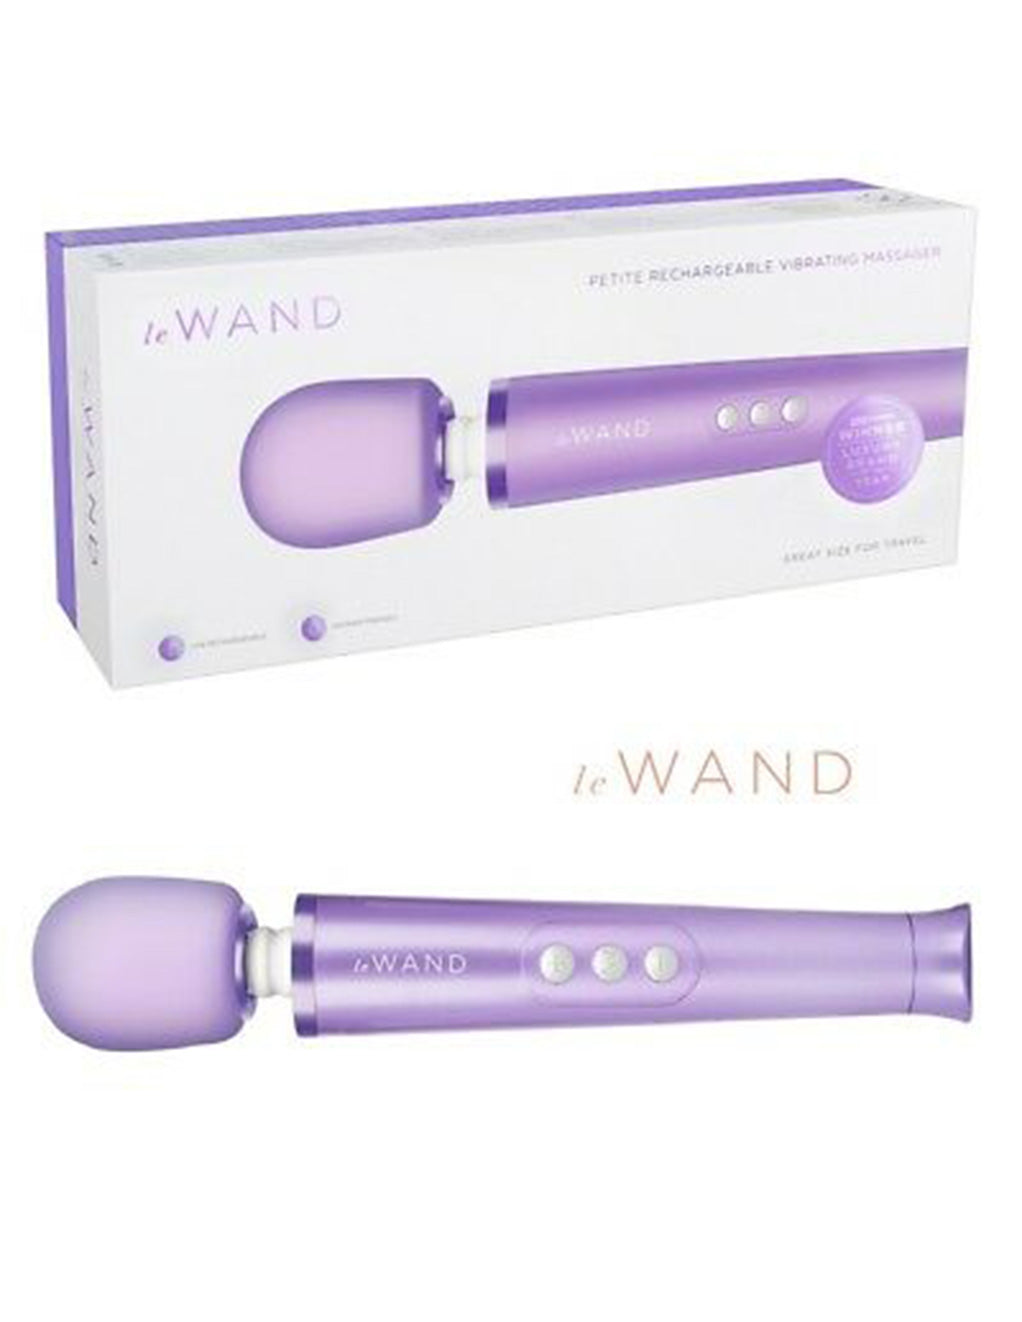 Le Wand Petite Rechargeable Massager Purple Box